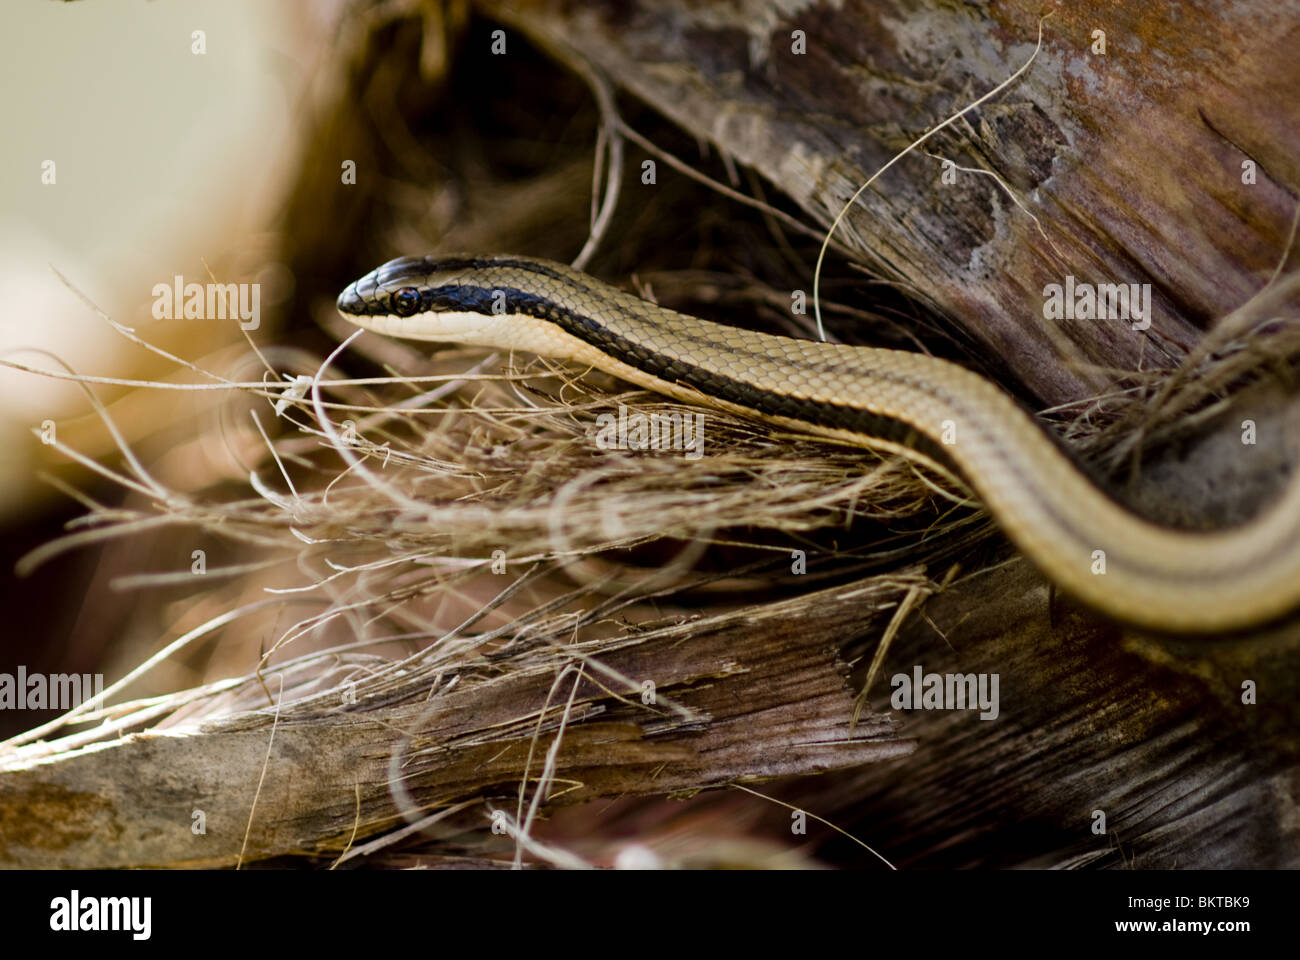 Whip snake en sable/arbre, Erindi réserver, Namibie Banque D'Images